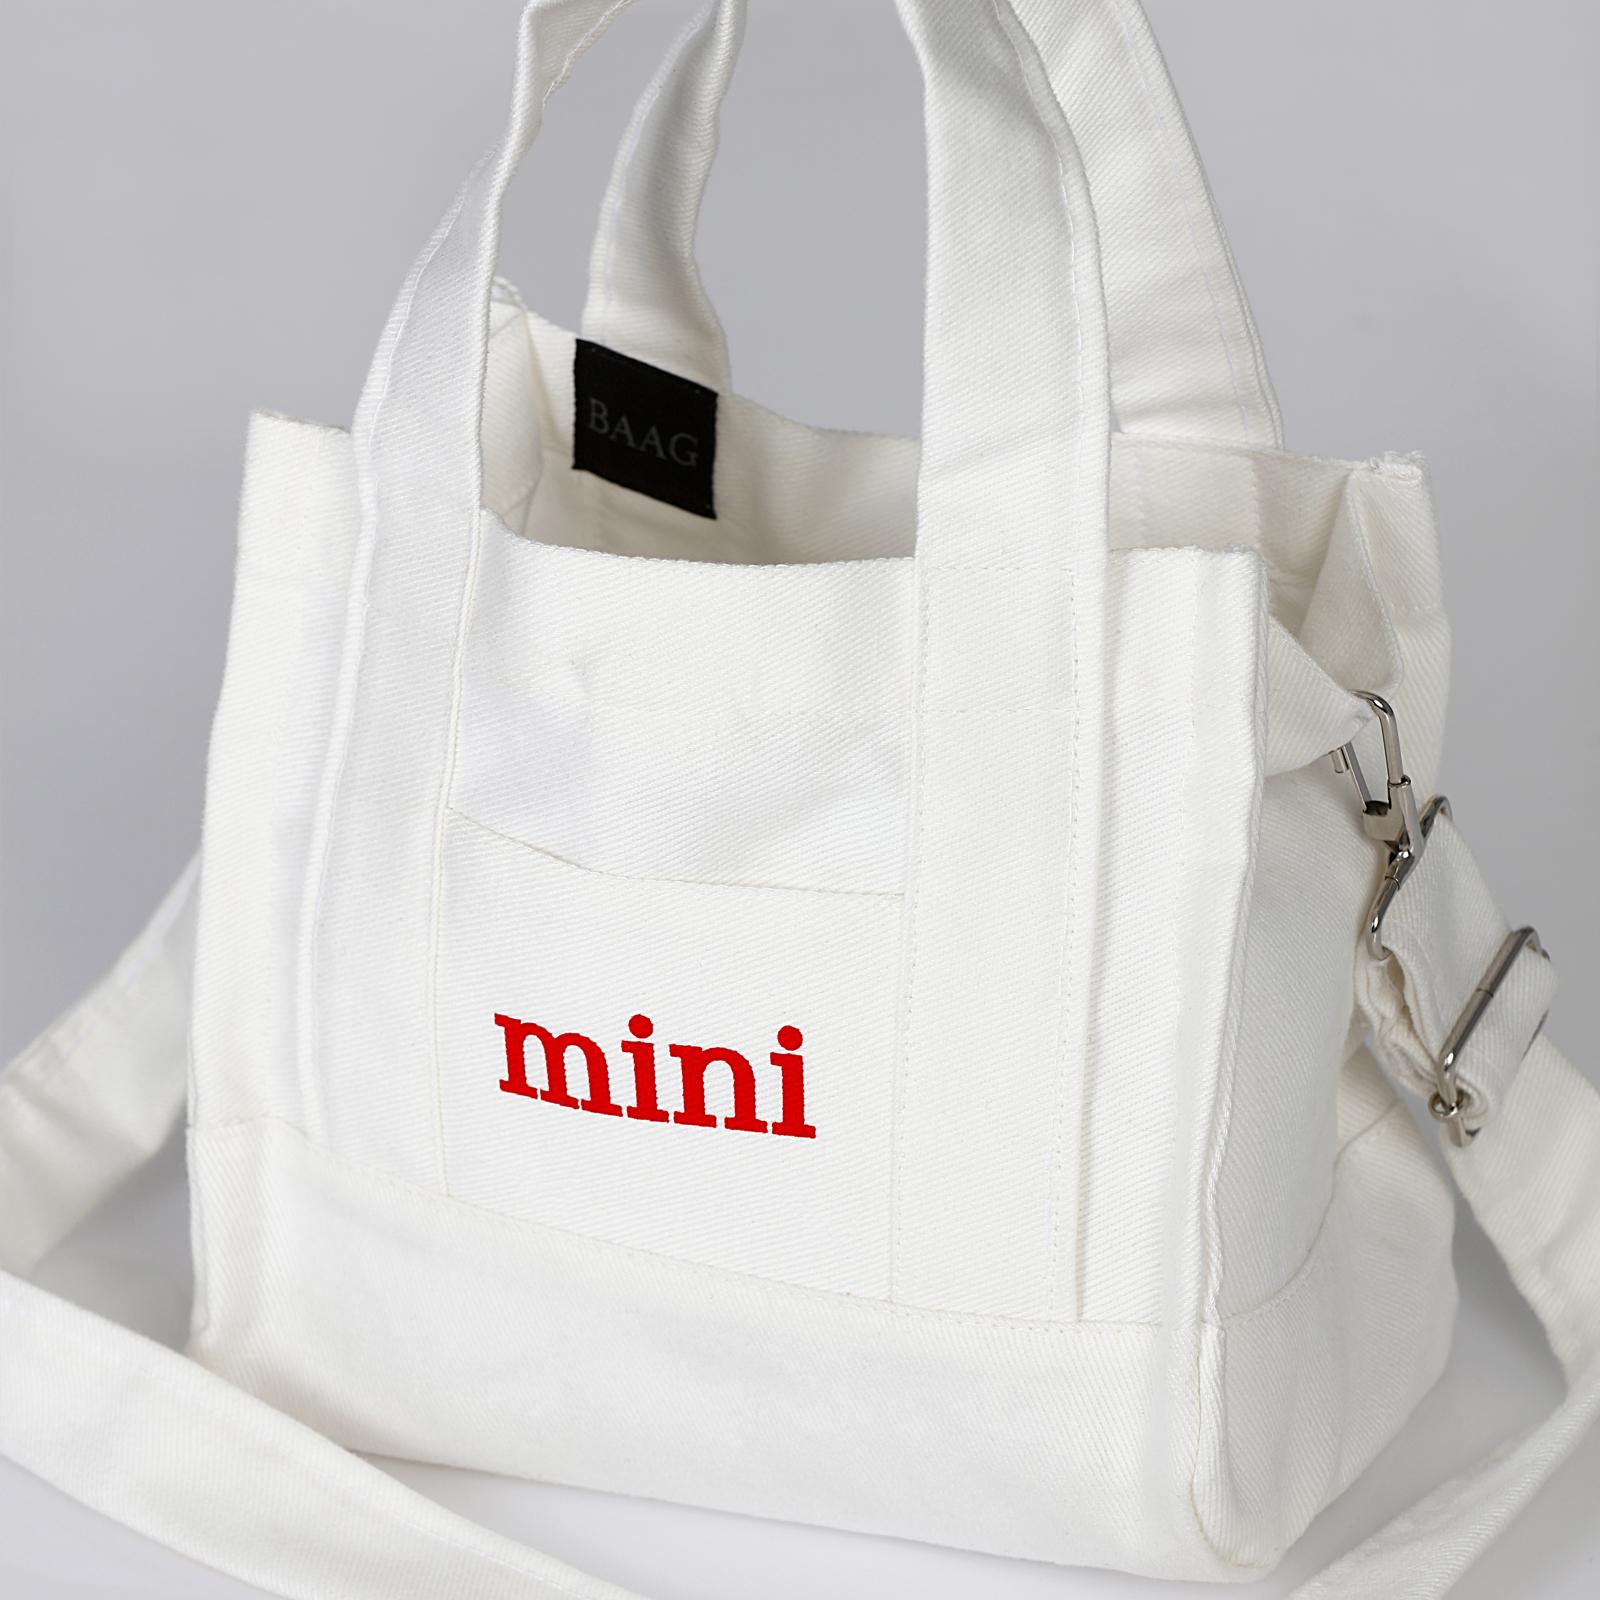 Puci Accessories Canvas Bag,Desing Bag,Messenger Bag,Homemade Bag